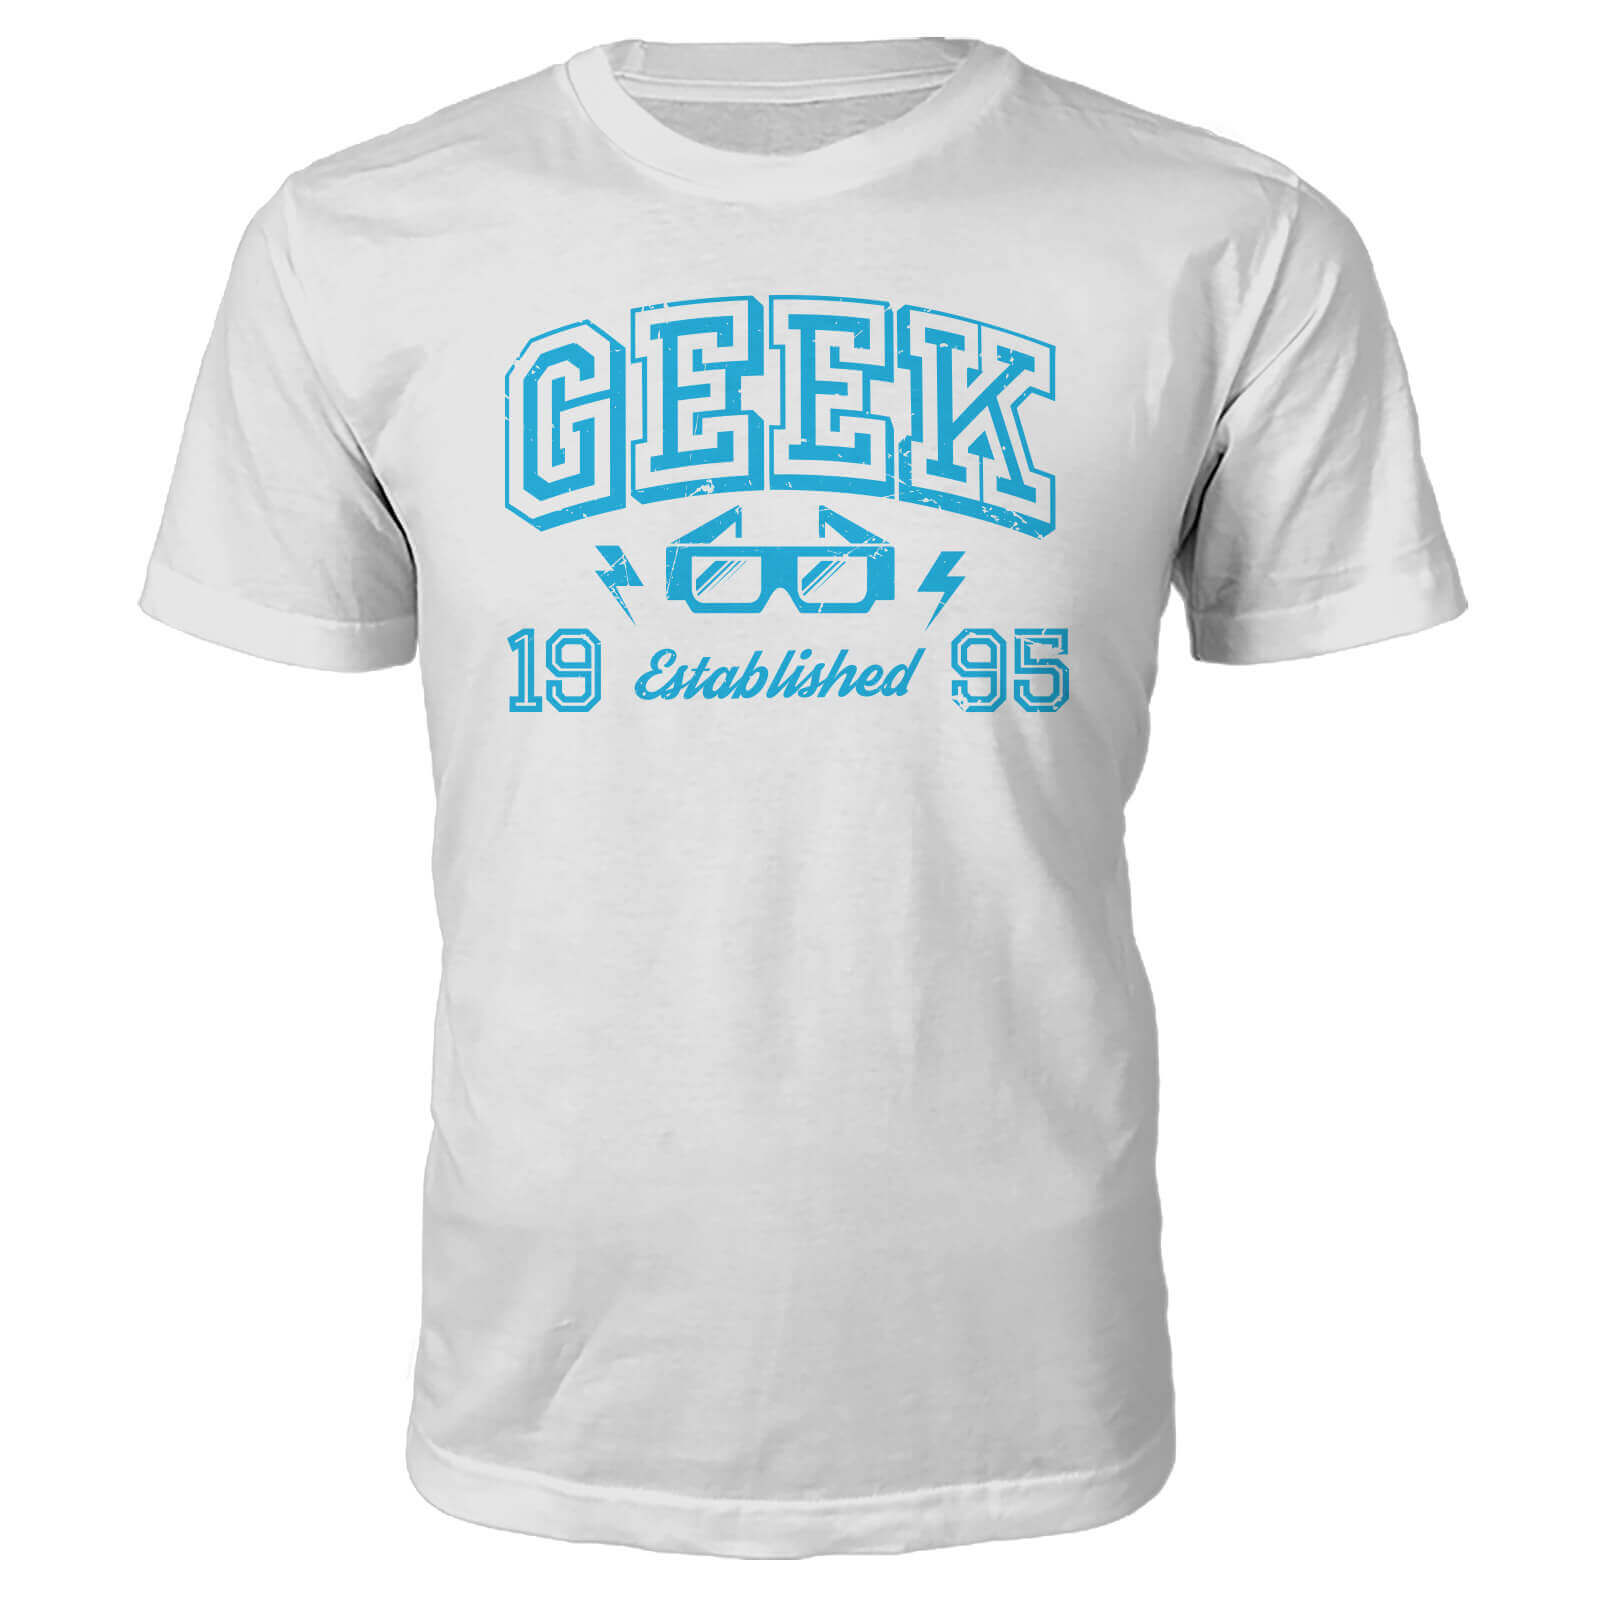 Geek Established 1990's T-Shirt- White - XXL - 1995